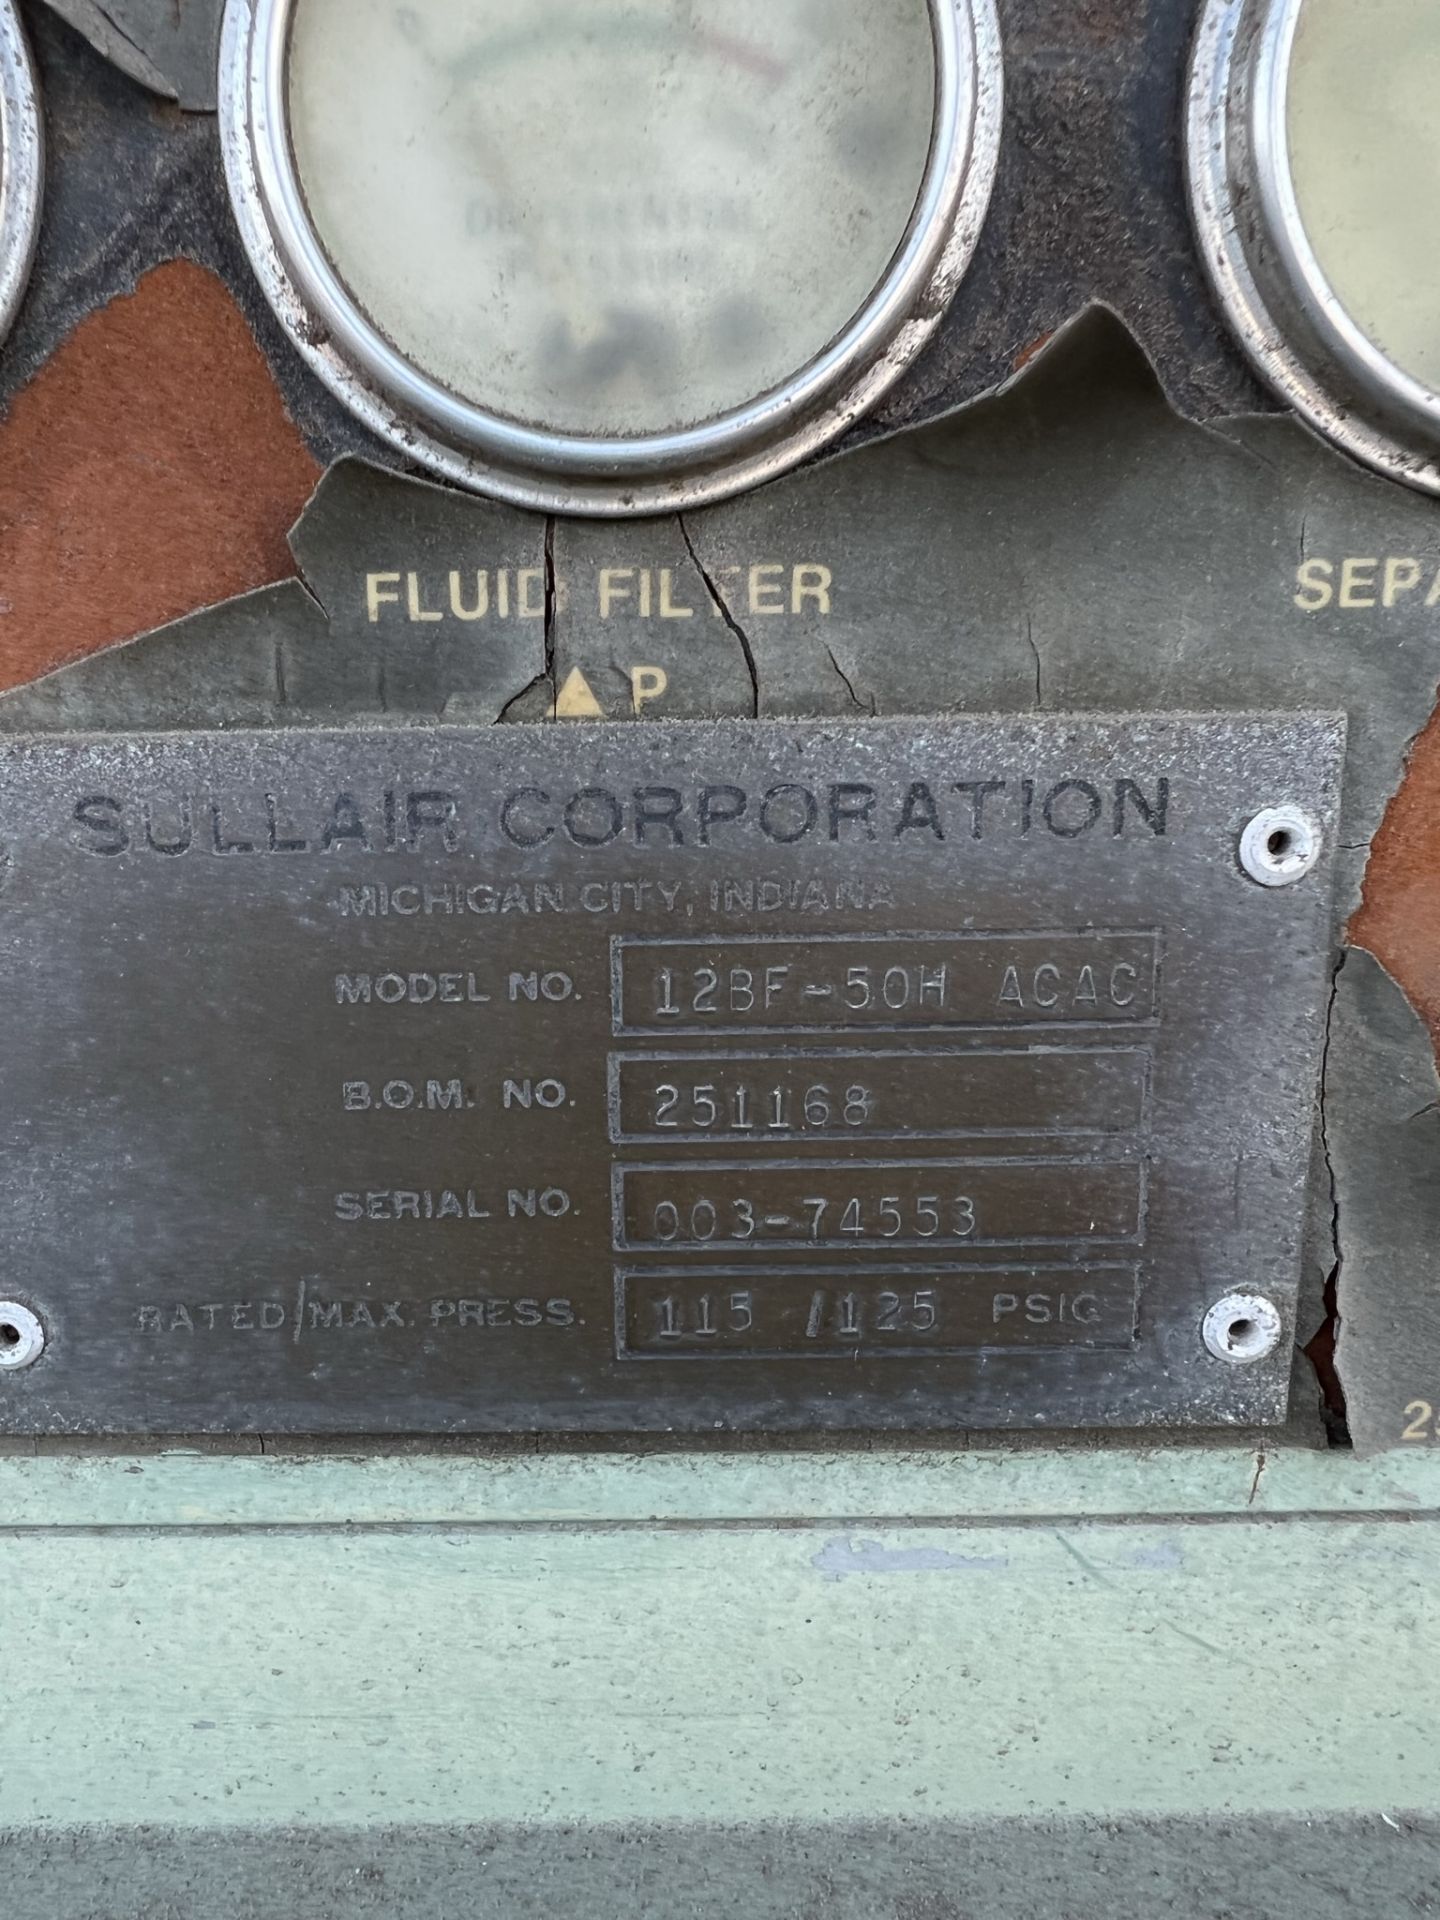 SULLAIR AIR COMPRESSOR, MODEL 12BF-50H ACAC, 50 HP, S/N 003-74553 - Image 3 of 3